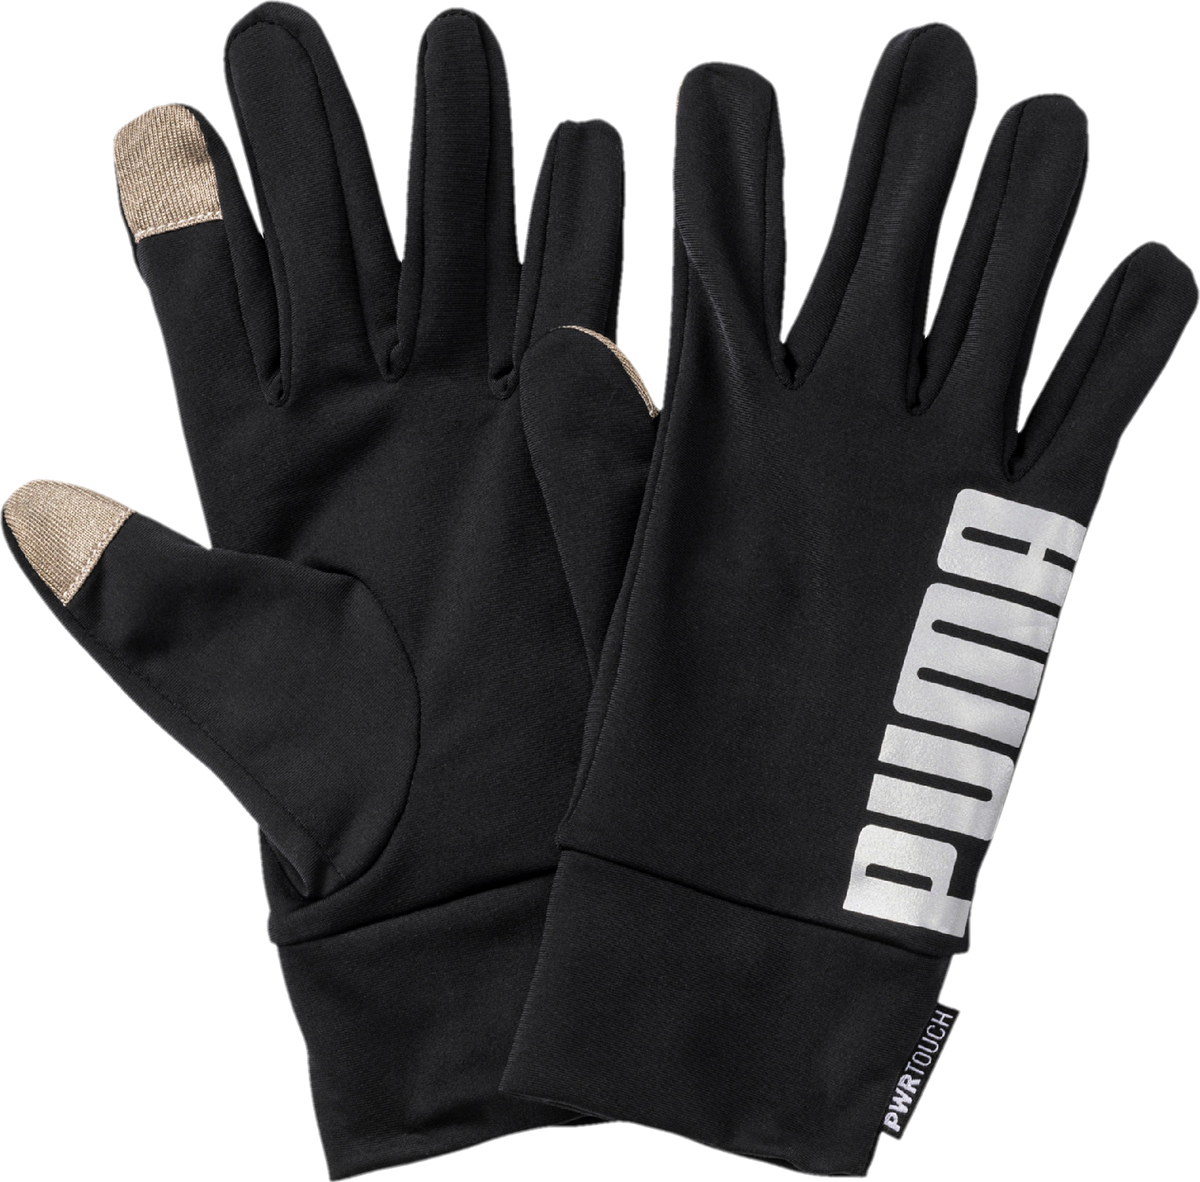 Перчатки Puma Pr Performance Gloves, цвет: черный. 04146101. Размер M (7,5)